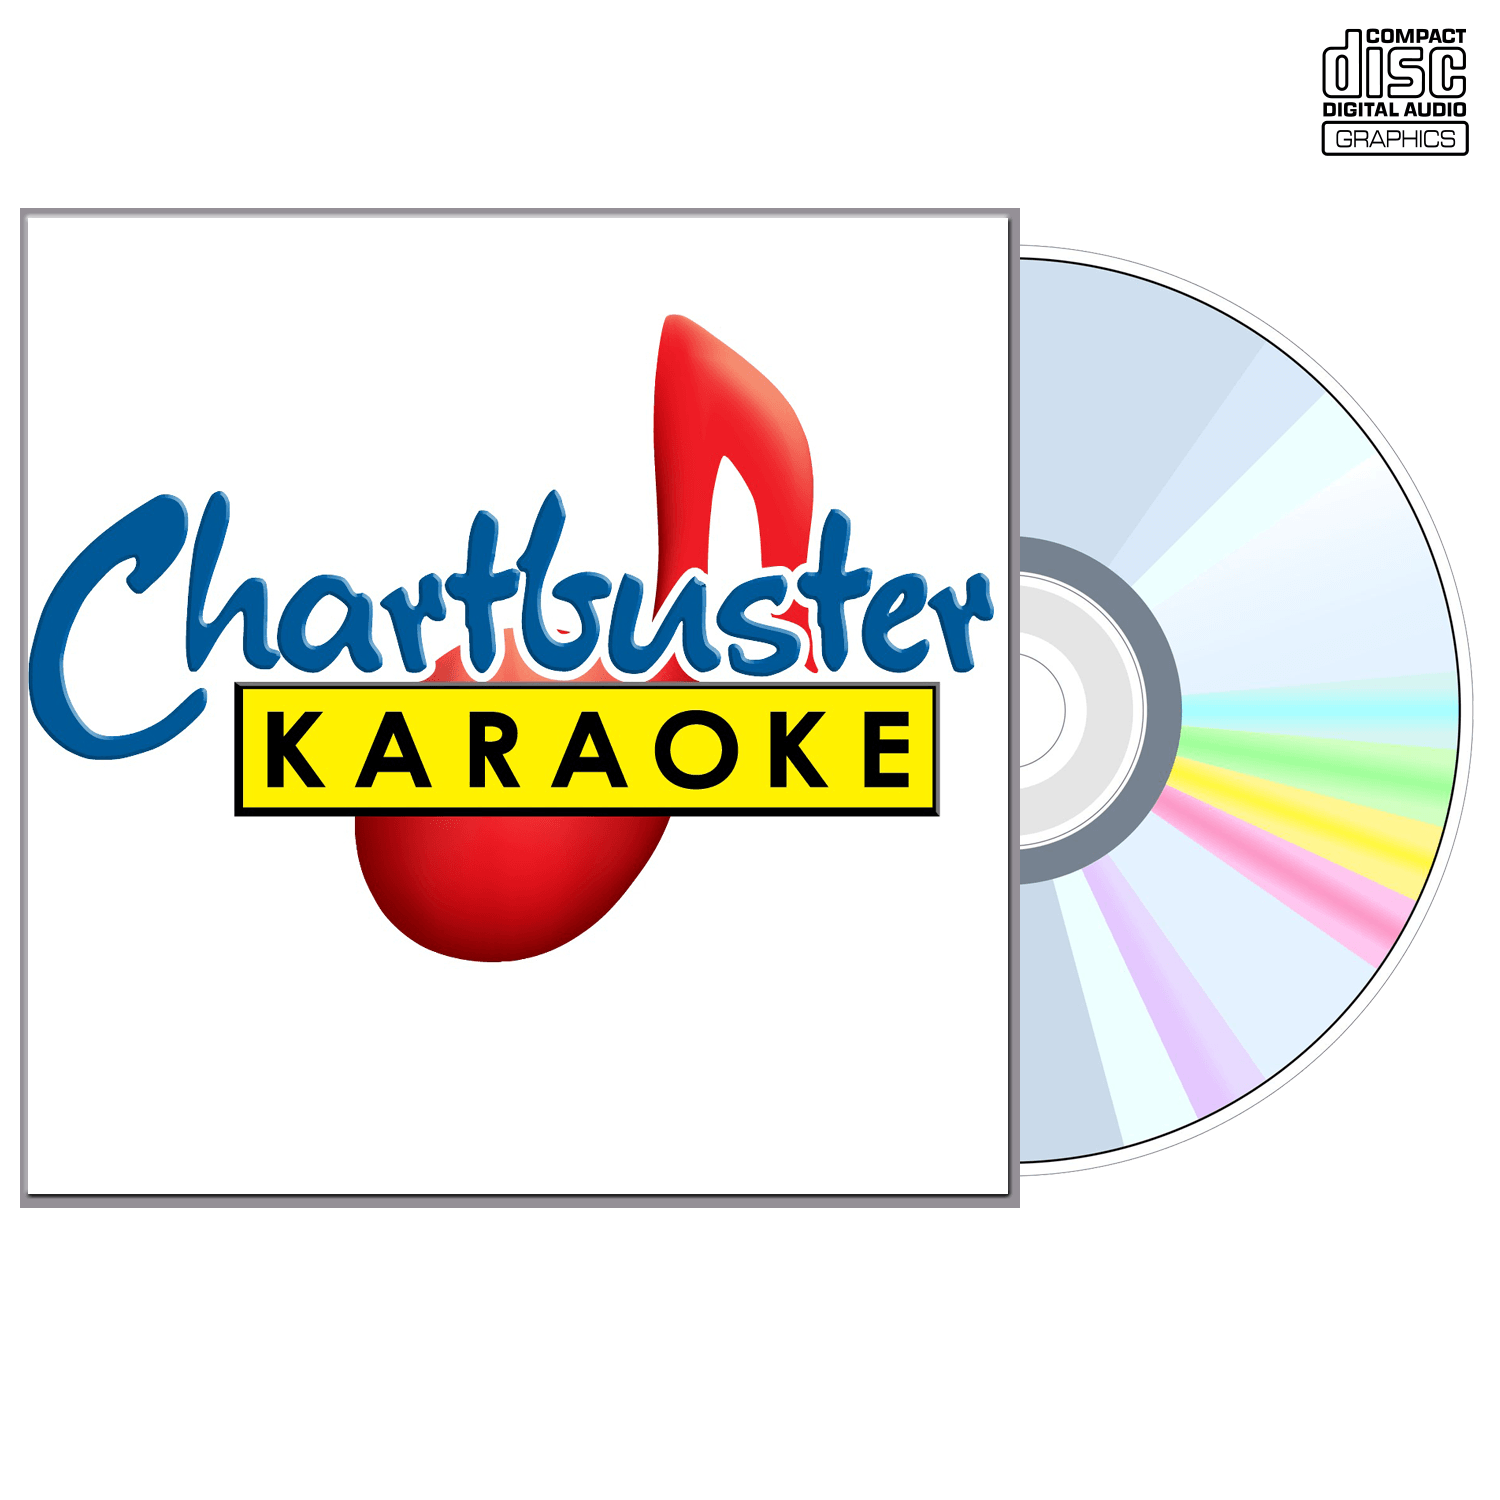 Tennessee Ernie Ford - CD+G - Chartbuster Karaoke - Karaoke Home Entertainment